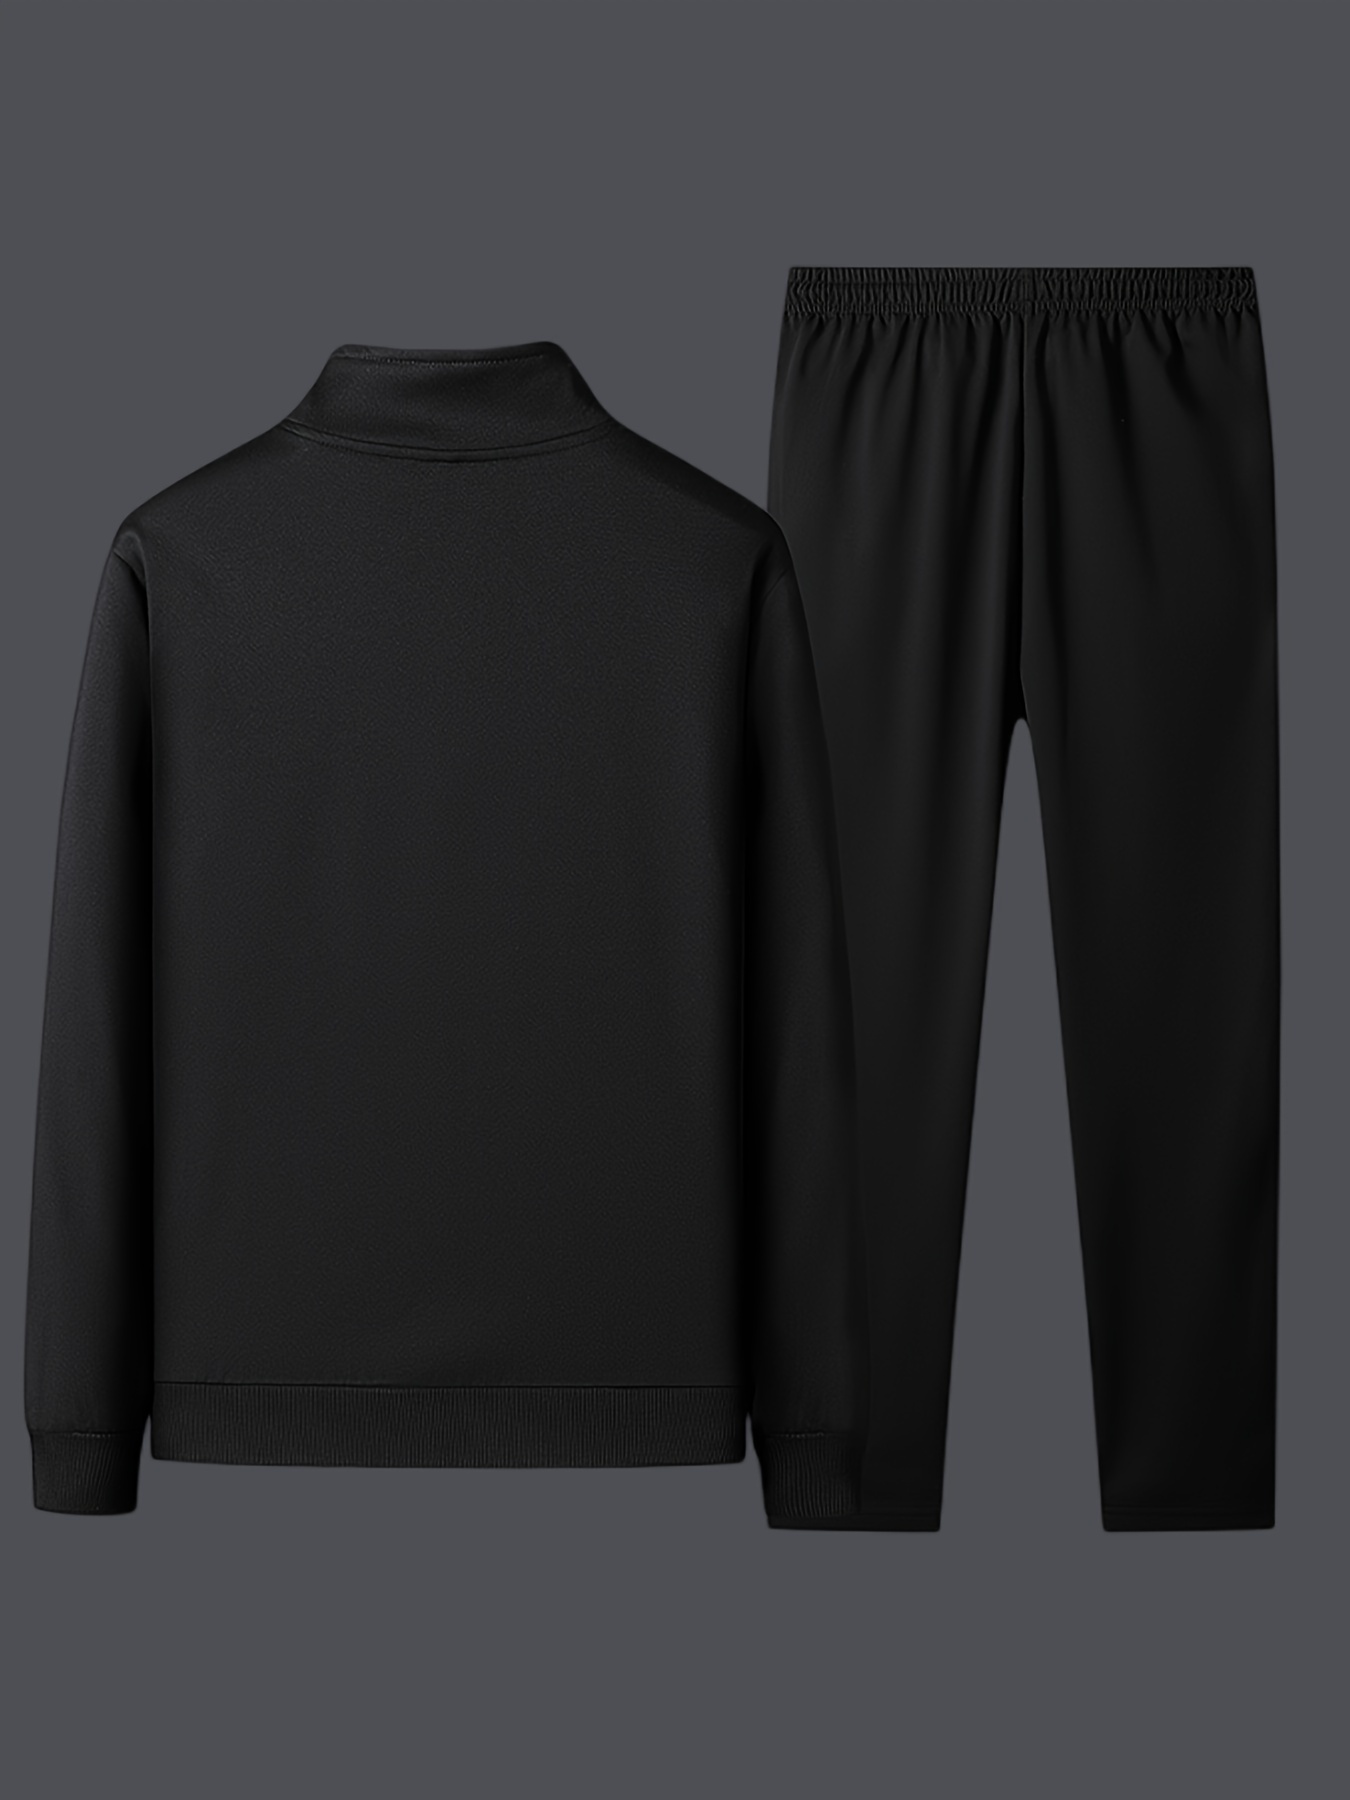 2023 Men's Tracksuit 2 Piece Hoodie Sweatsuit Sets Stylish Casual Hooded  Sweatshirts Pants Set Jogging Athletic Sport Suits